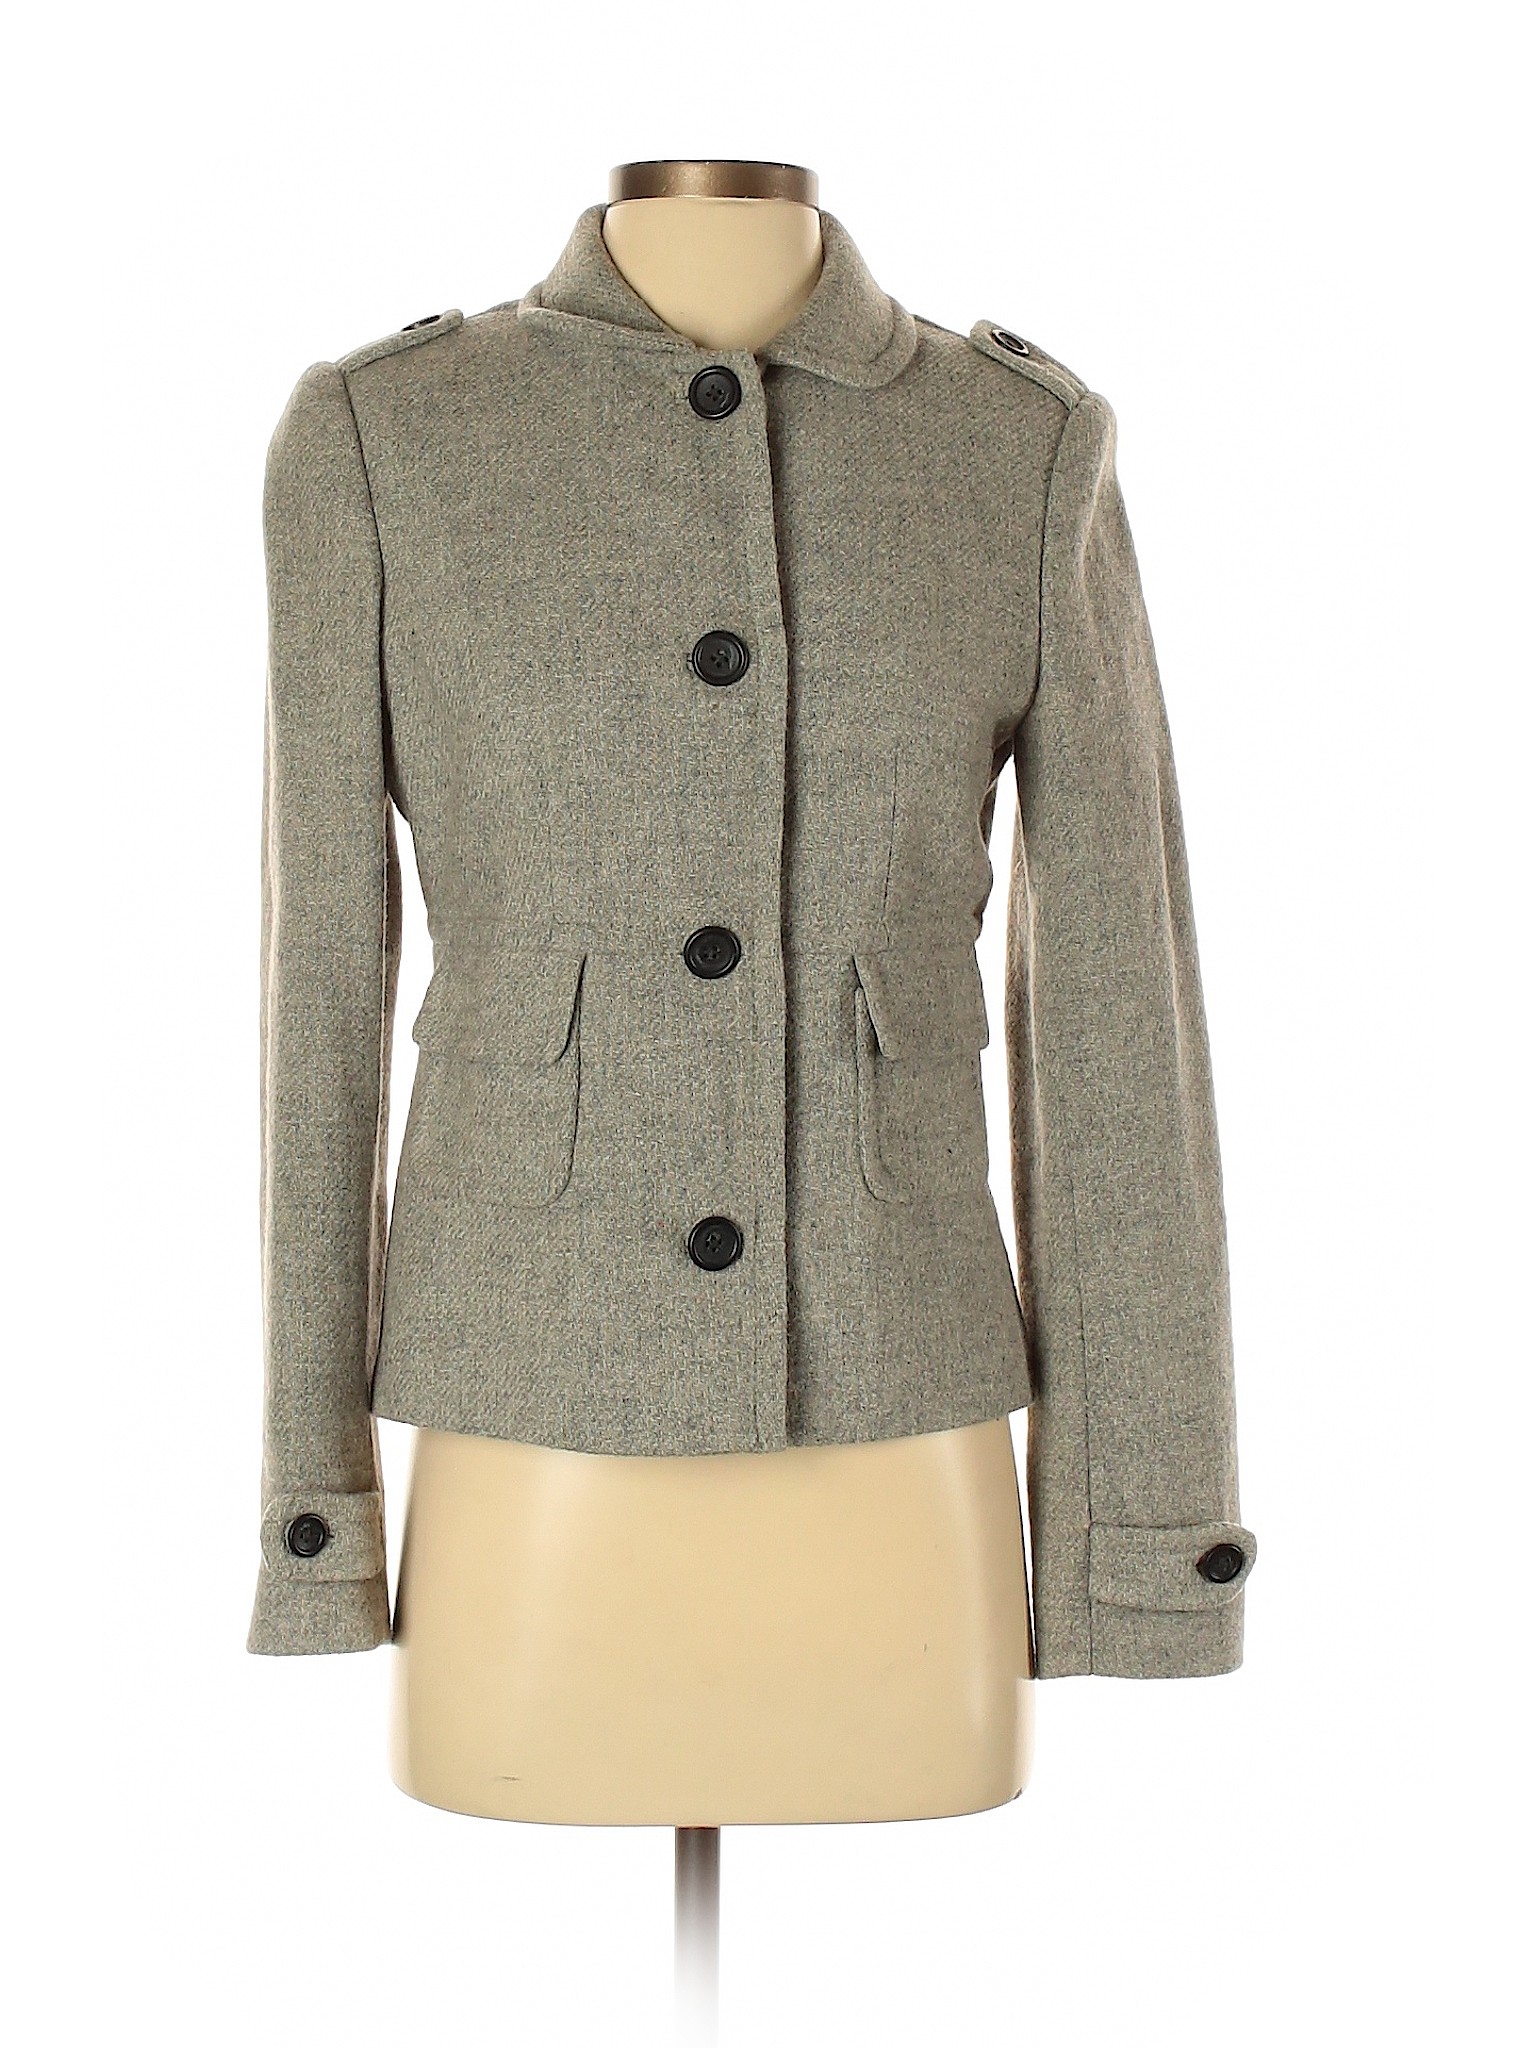 Banana Republic Women Gray Wool Coat S | eBay